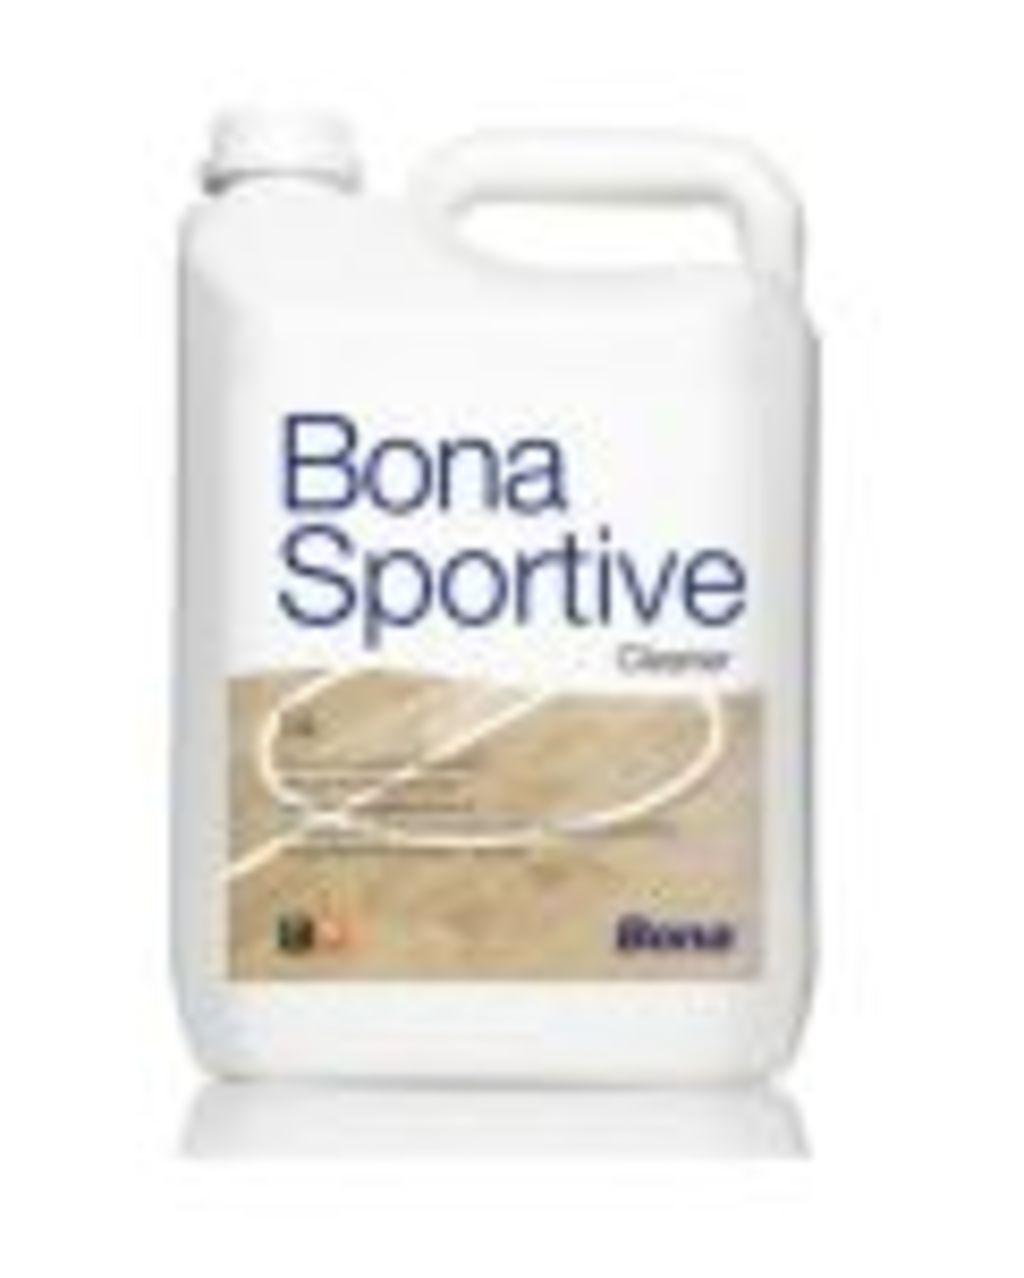 Bona Sportive Cleaner 5L